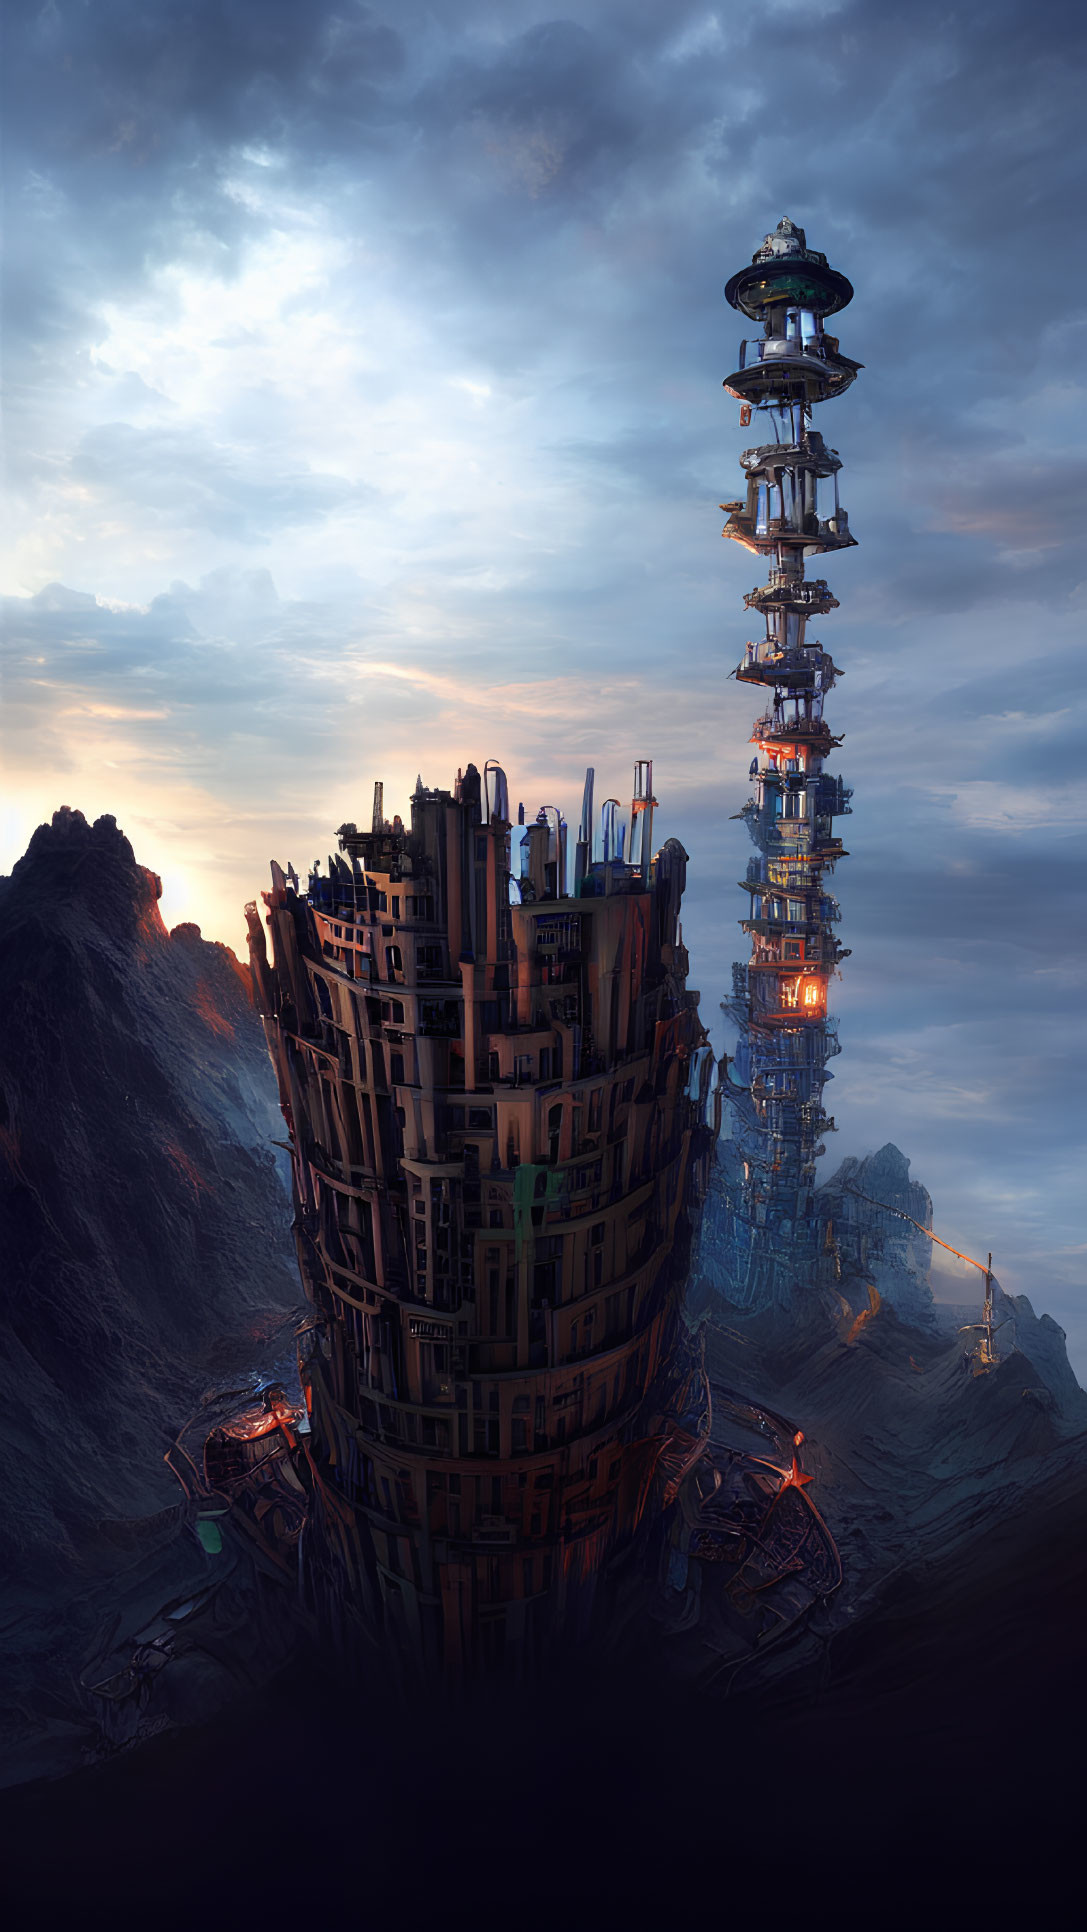 Futuristic multi-level structure in mountainous terrain at twilight